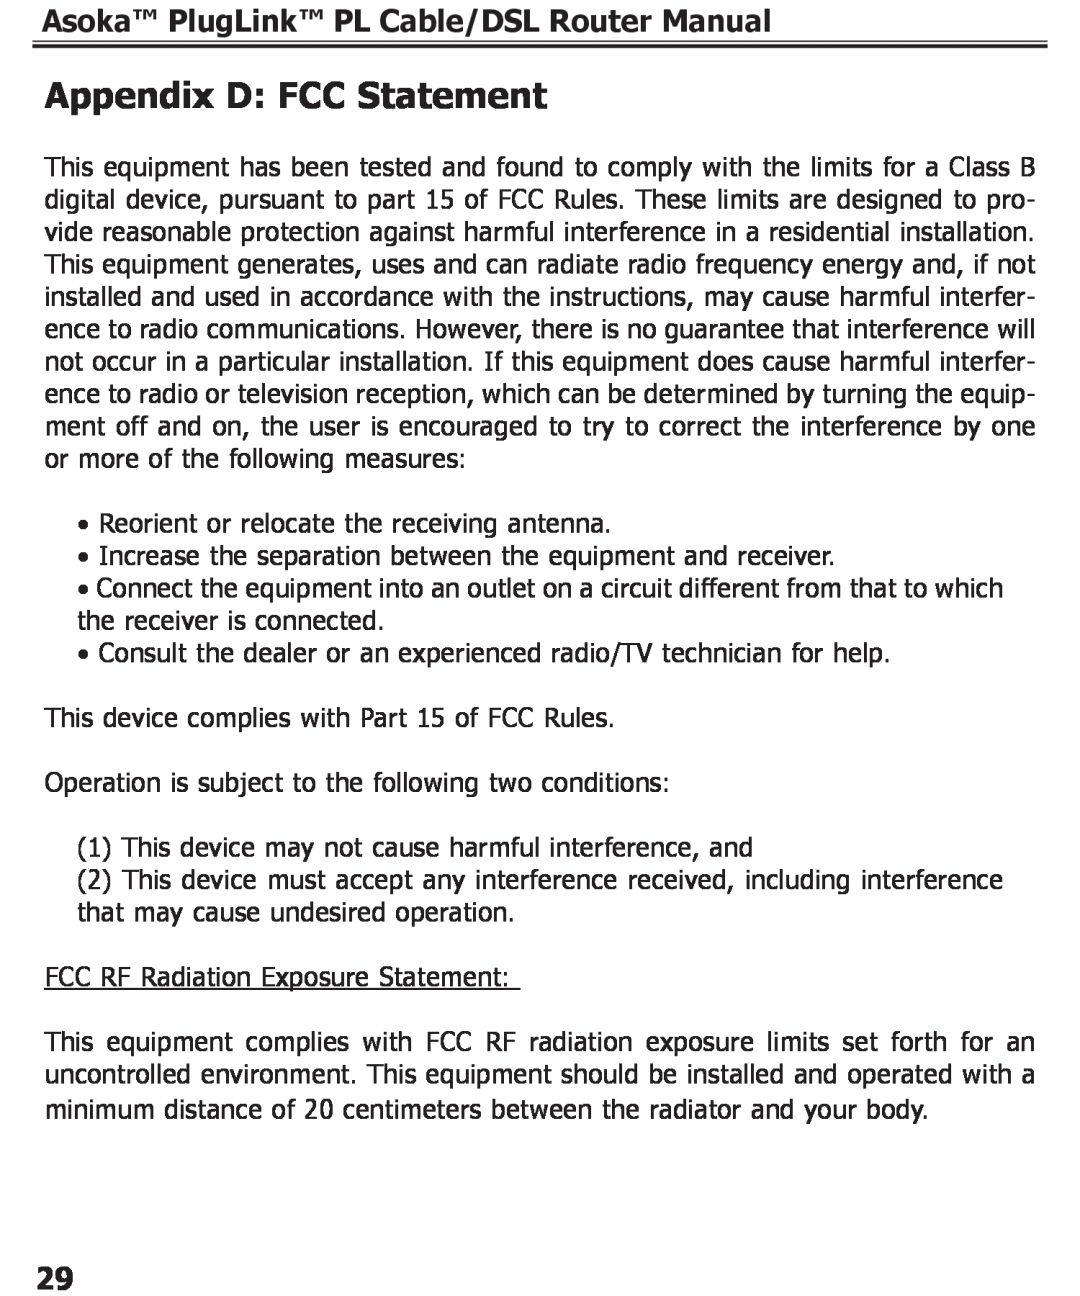 Asoka PL9920-BBR specifications Appendix D FCC Statement, Asoka PlugLink PL Cable/DSL Router Manual 